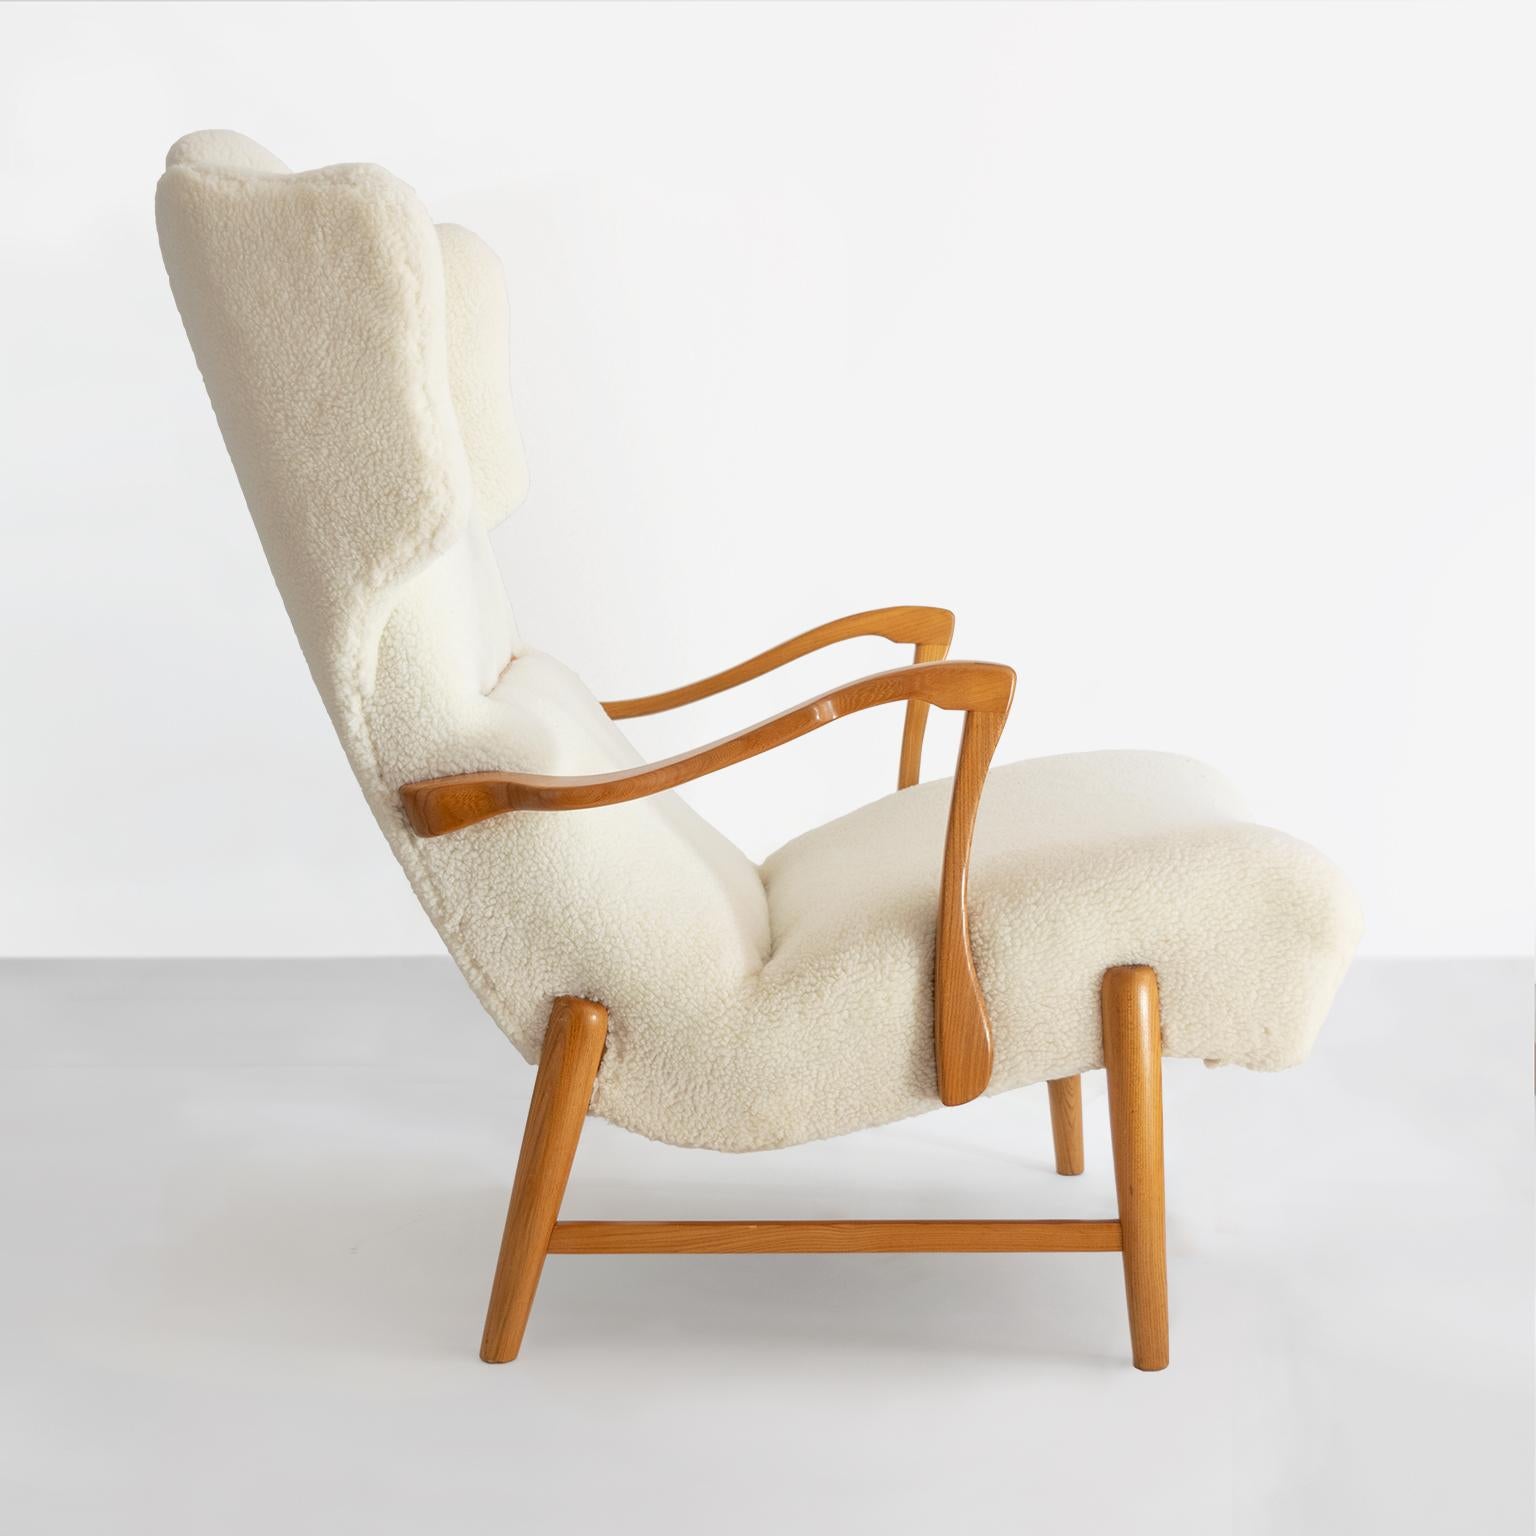 20th Century Winged Back Scandinavian Modern Lounge Chair in Faux Sheepskin Fabric